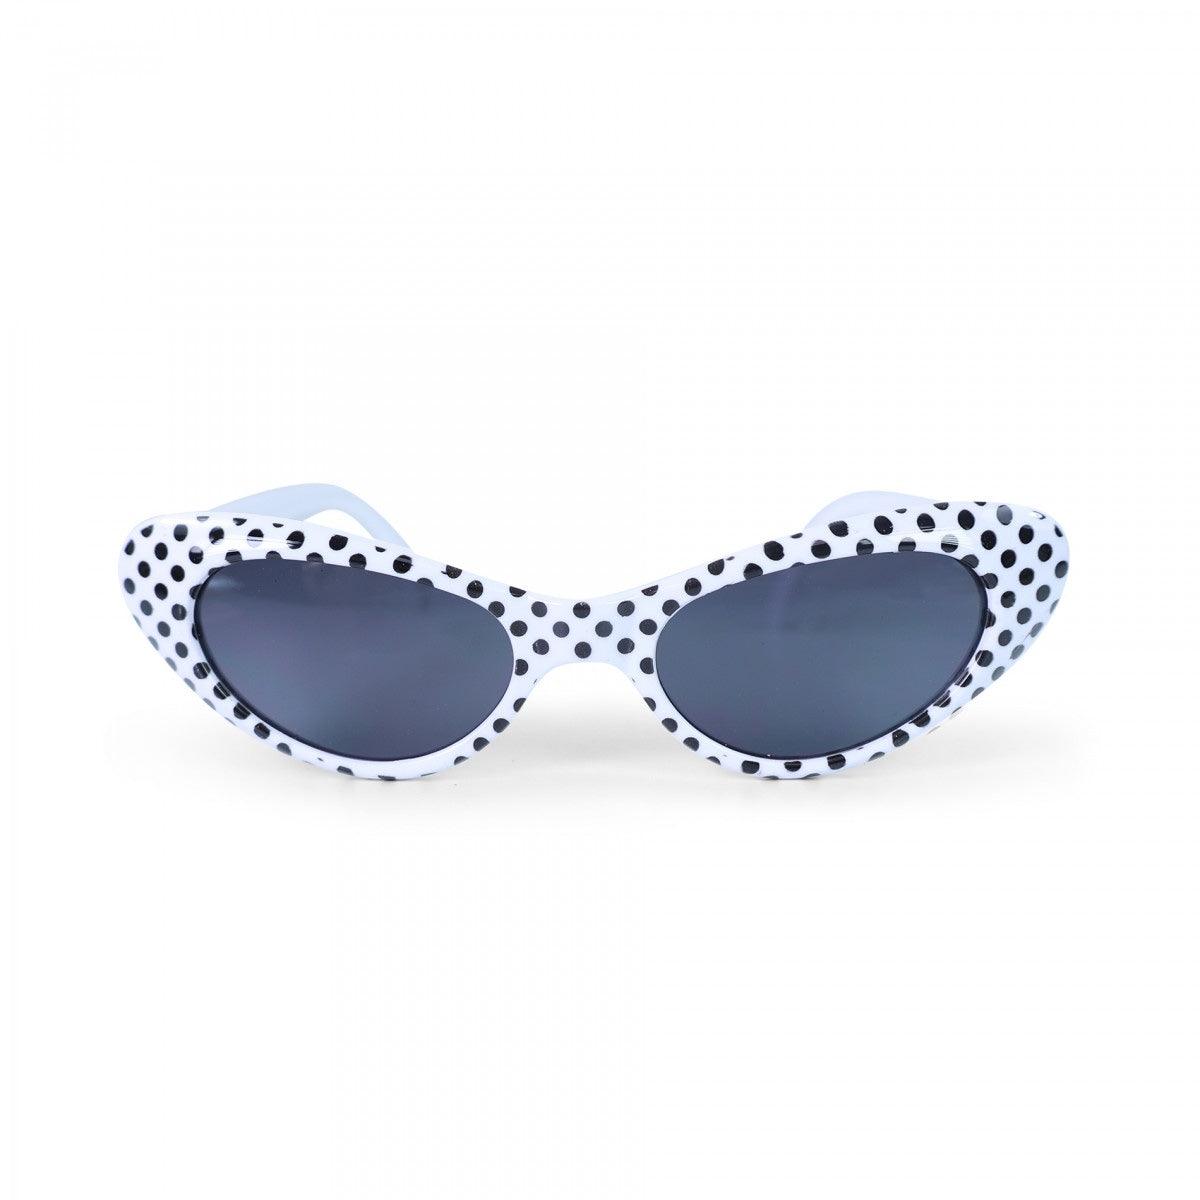 Brýle Retro pro dívky s tečkami - Pandoo